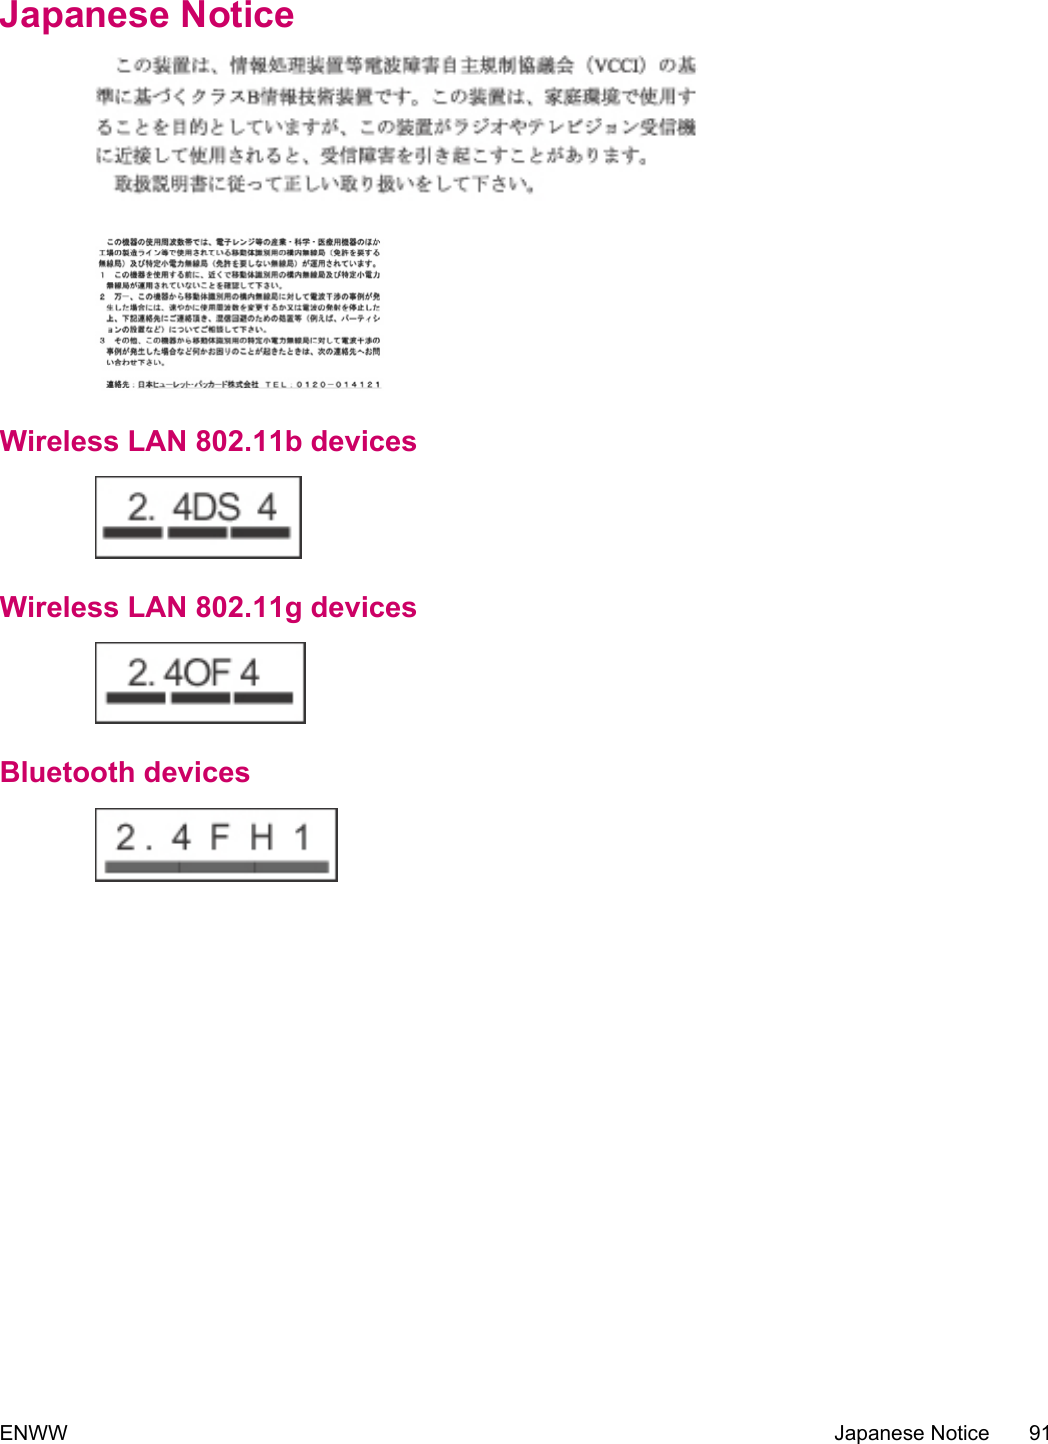 Japanese NoticeWireless LAN 802.11b devicesWireless LAN 802.11g devicesBluetooth devicesENWW Japanese Notice 91